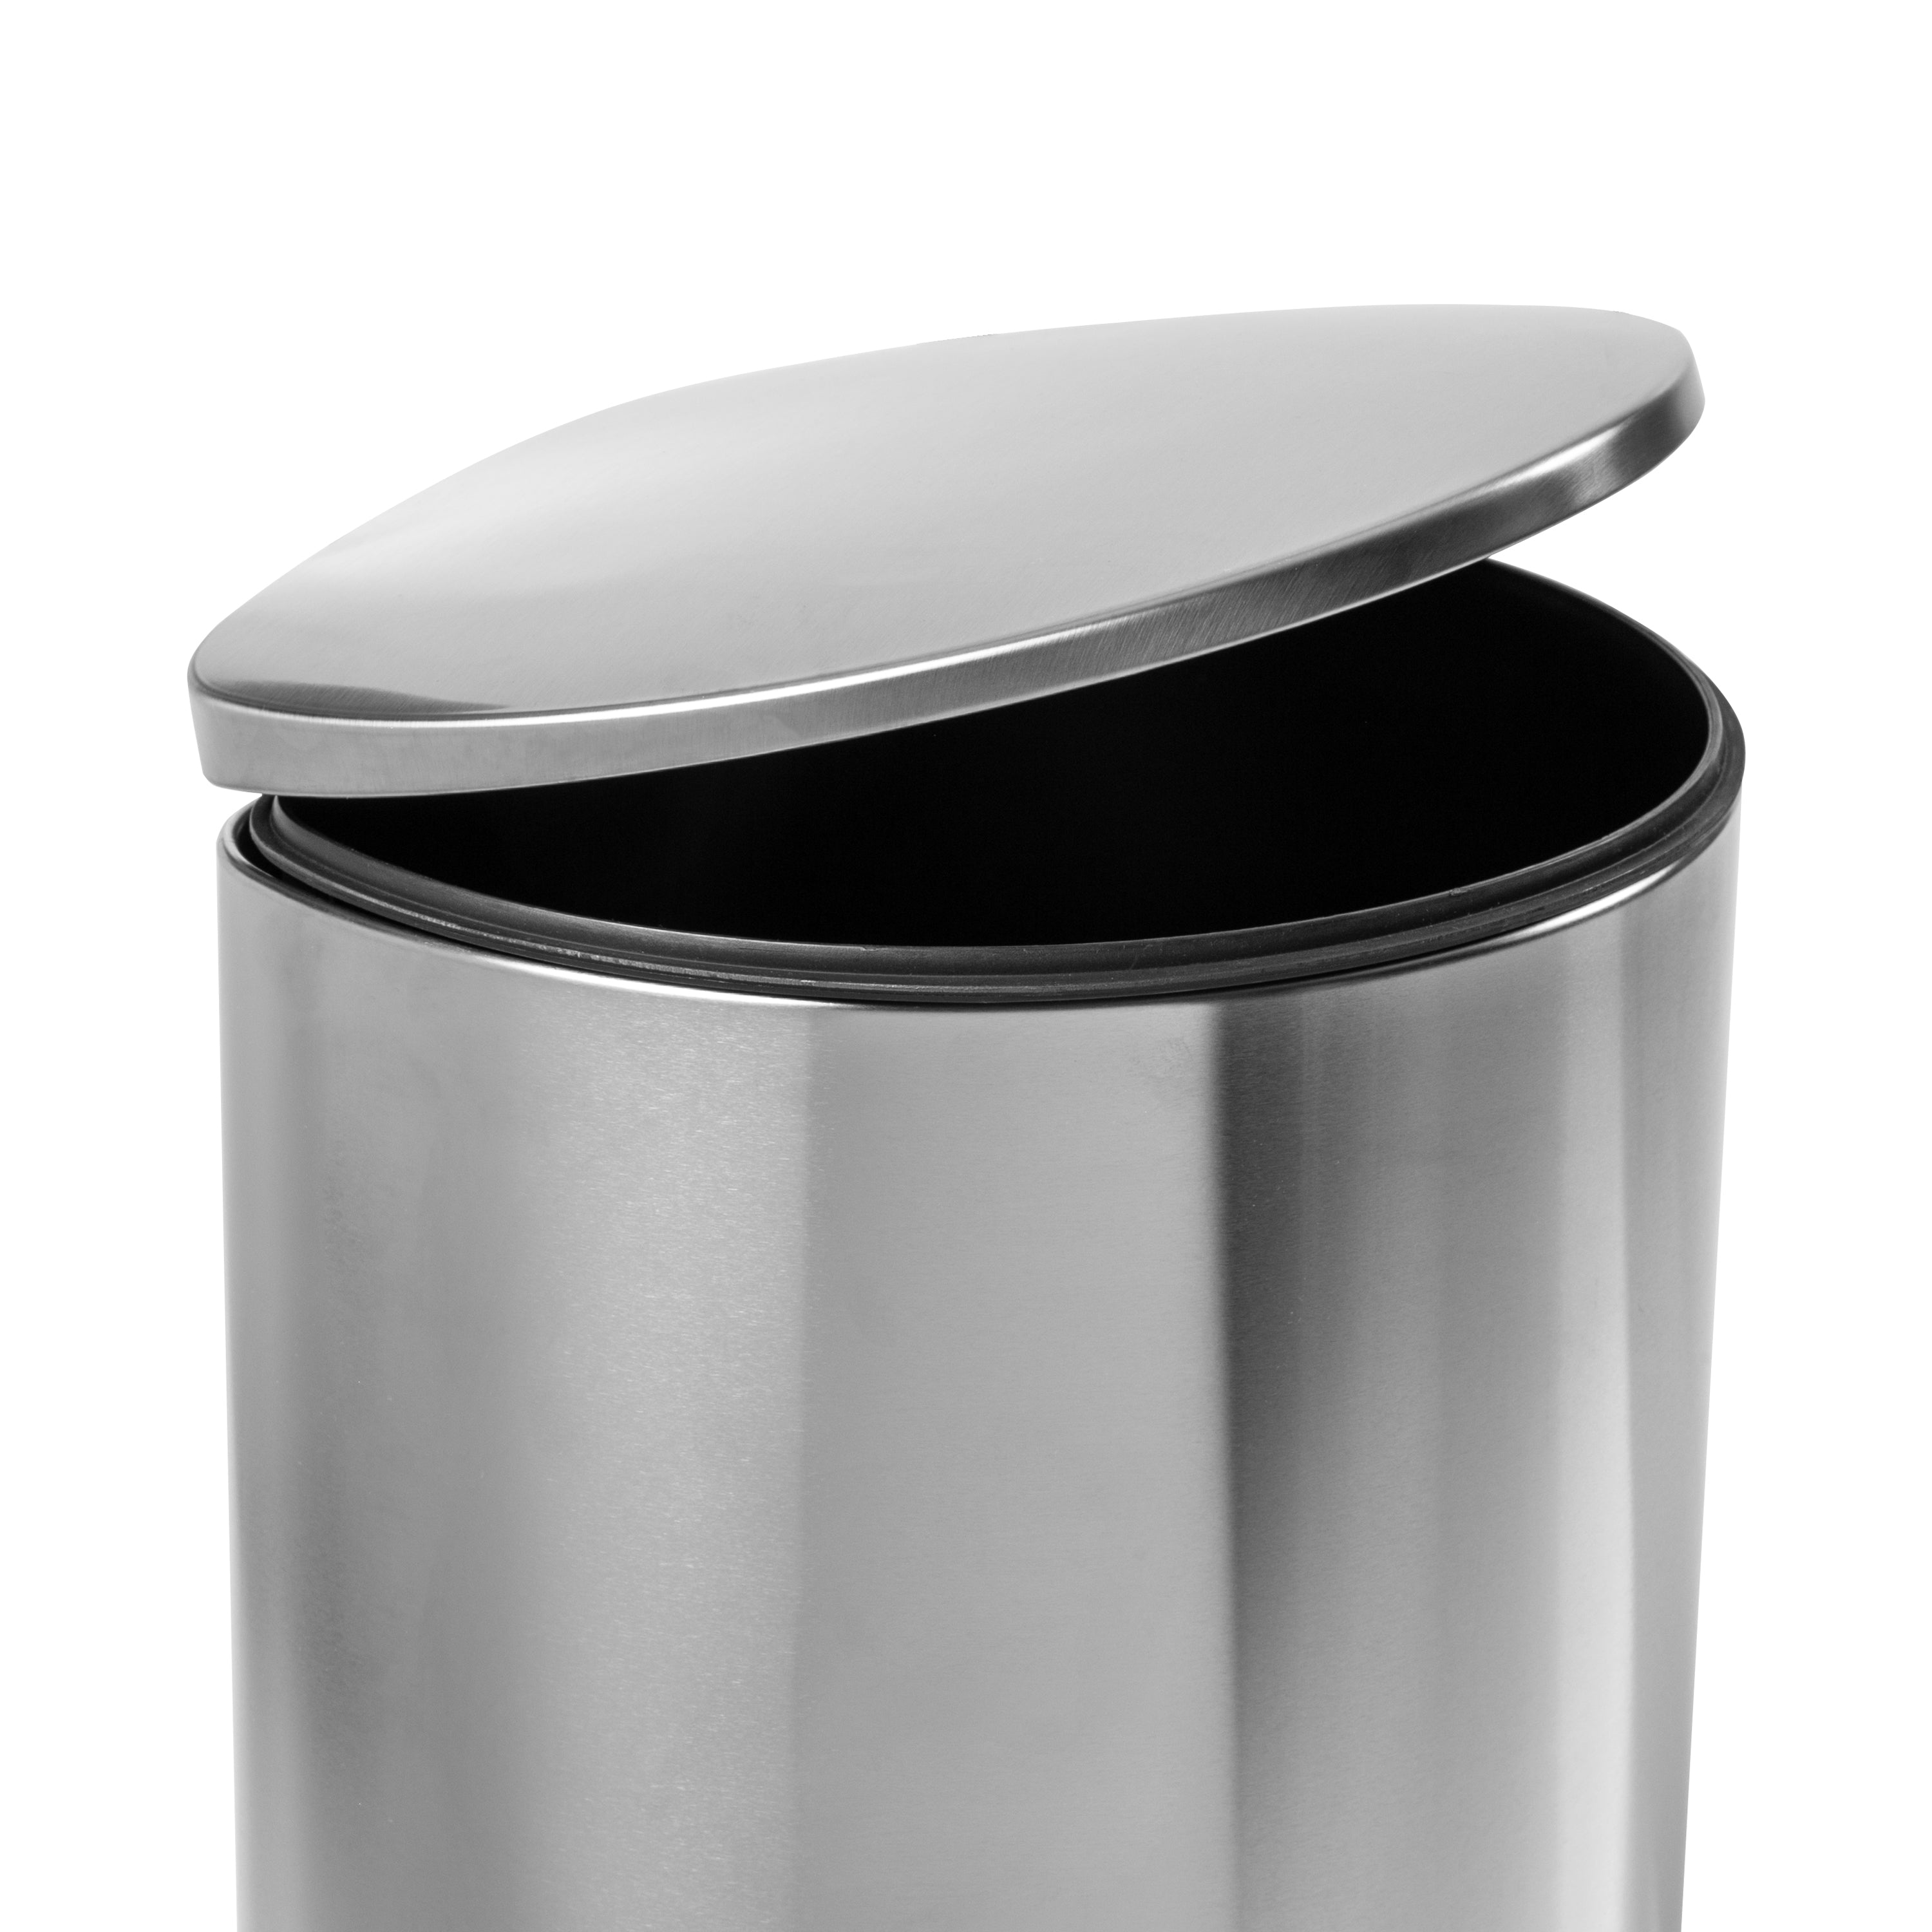 Fingerhut - Honey-Can-Do Stainless Steel Step 13-Gallon Trash Can